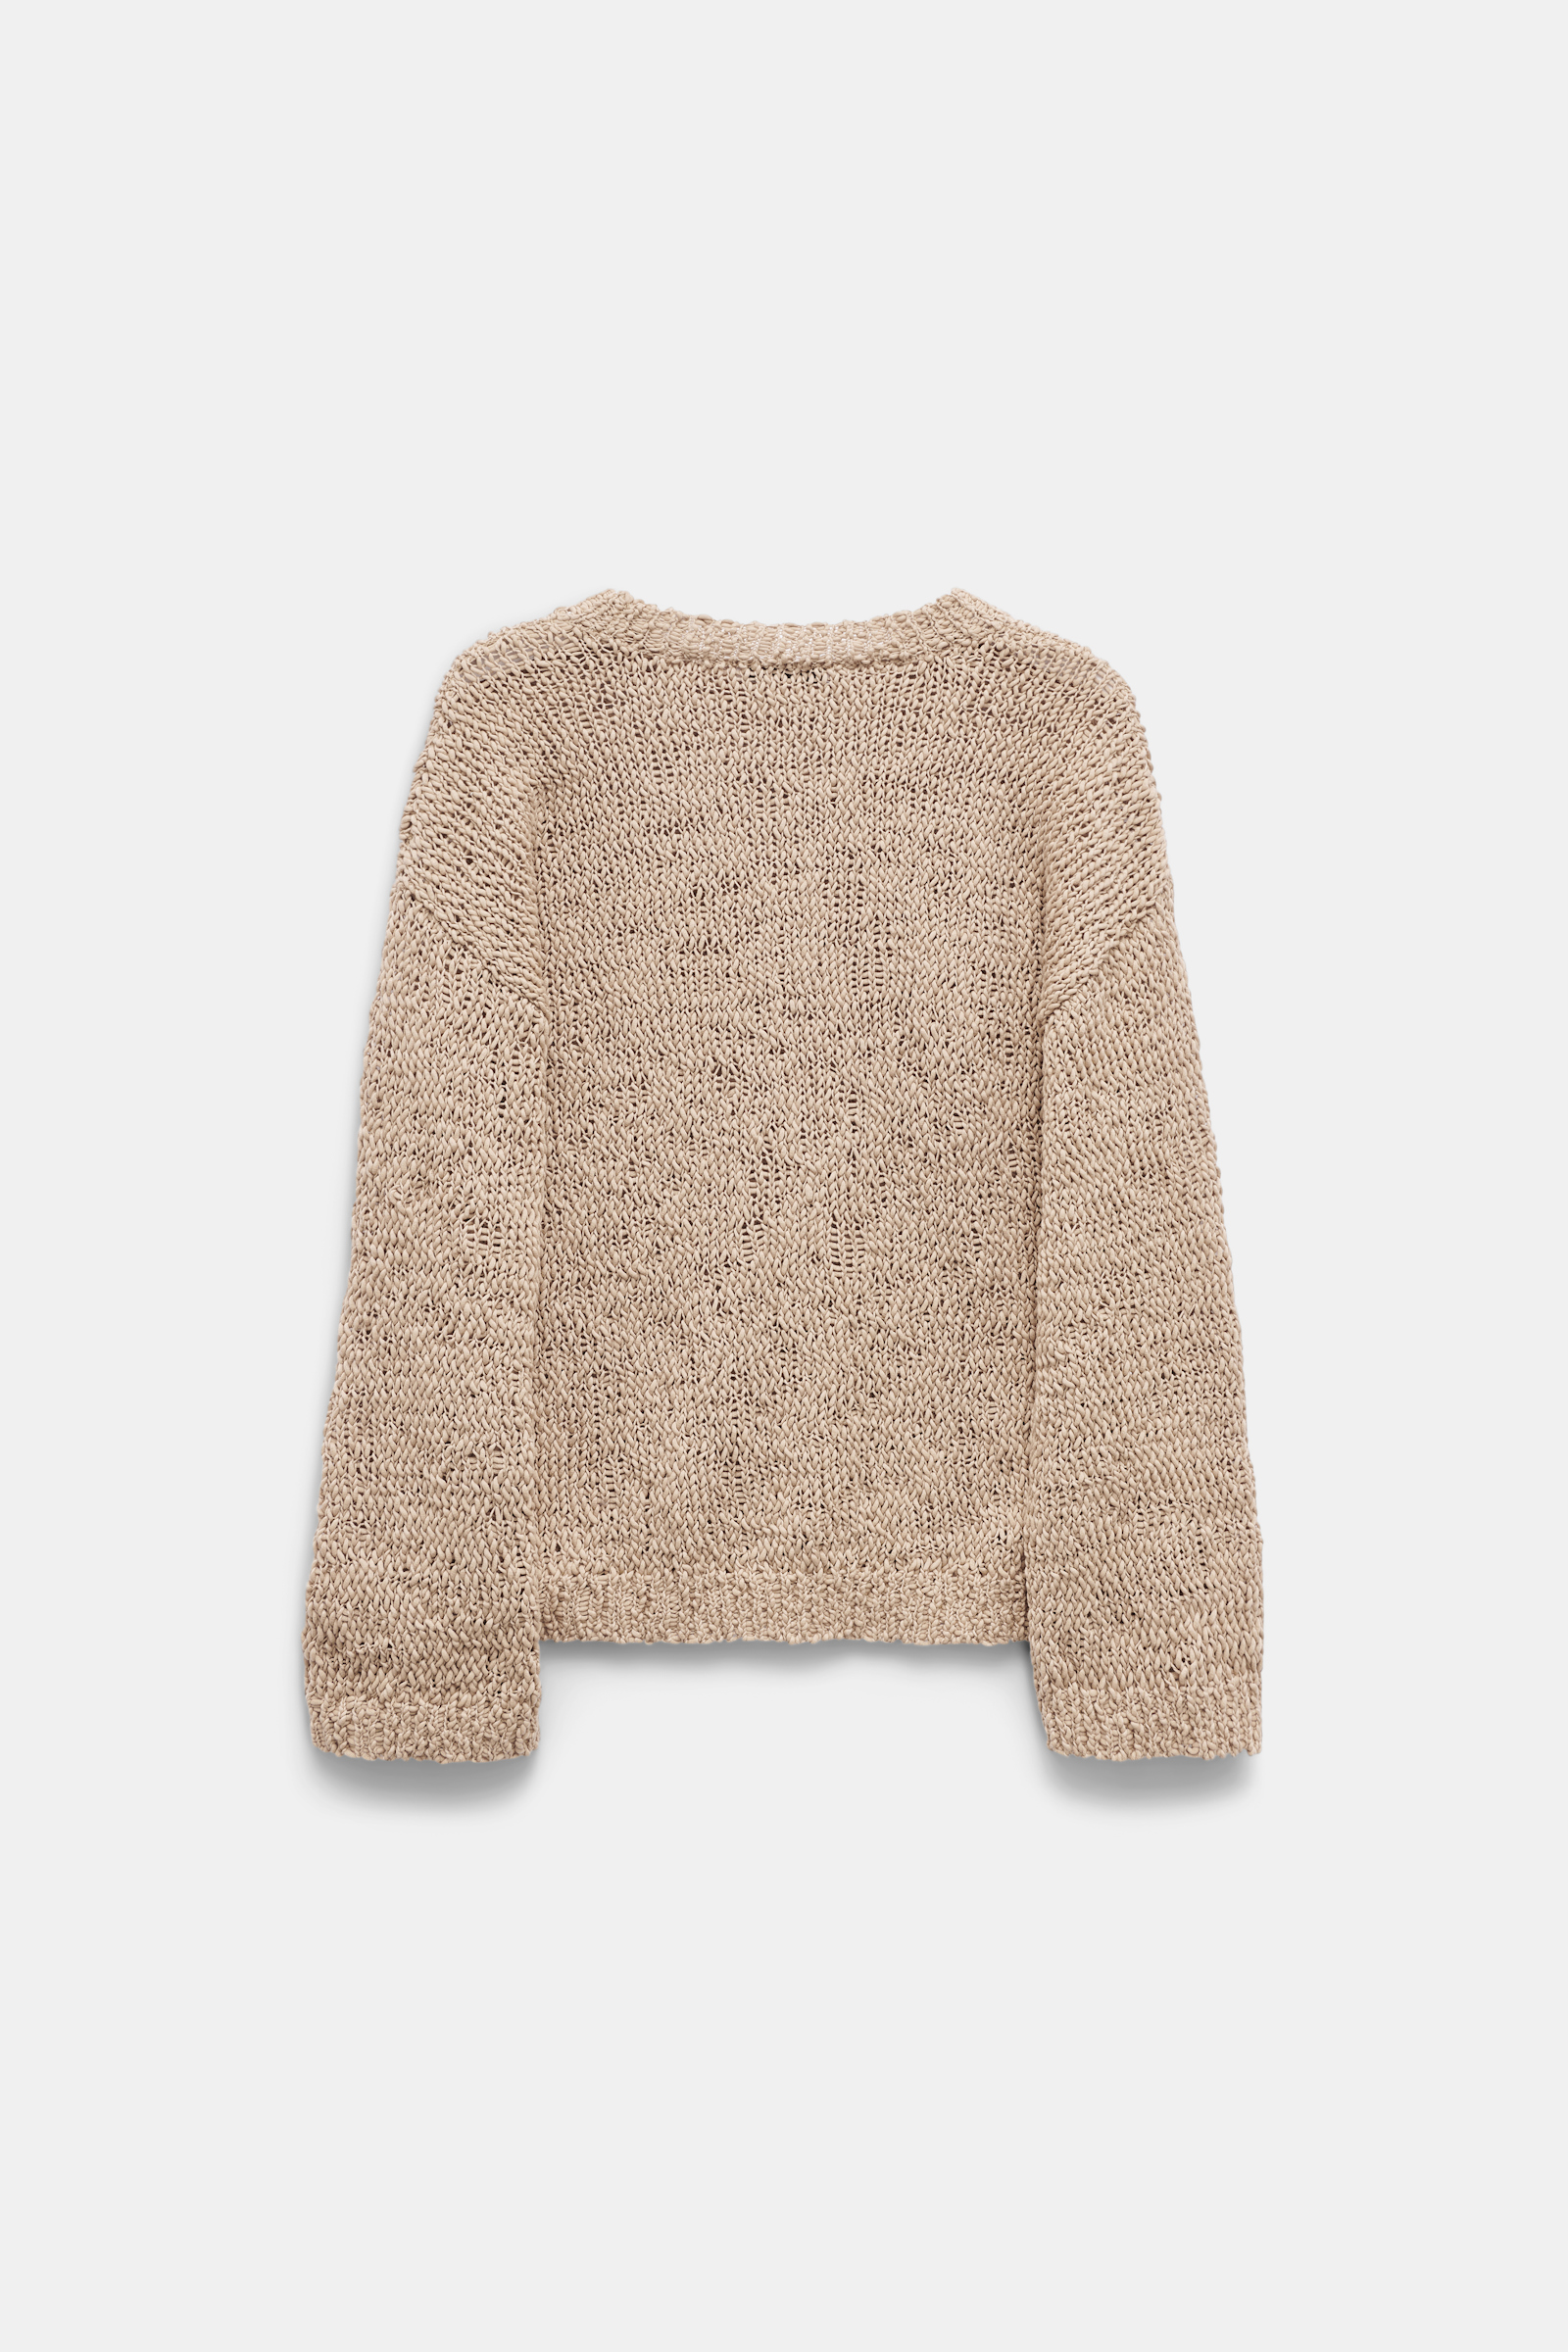 Dorothee Schumacher Textural open knit cotton pullover camel